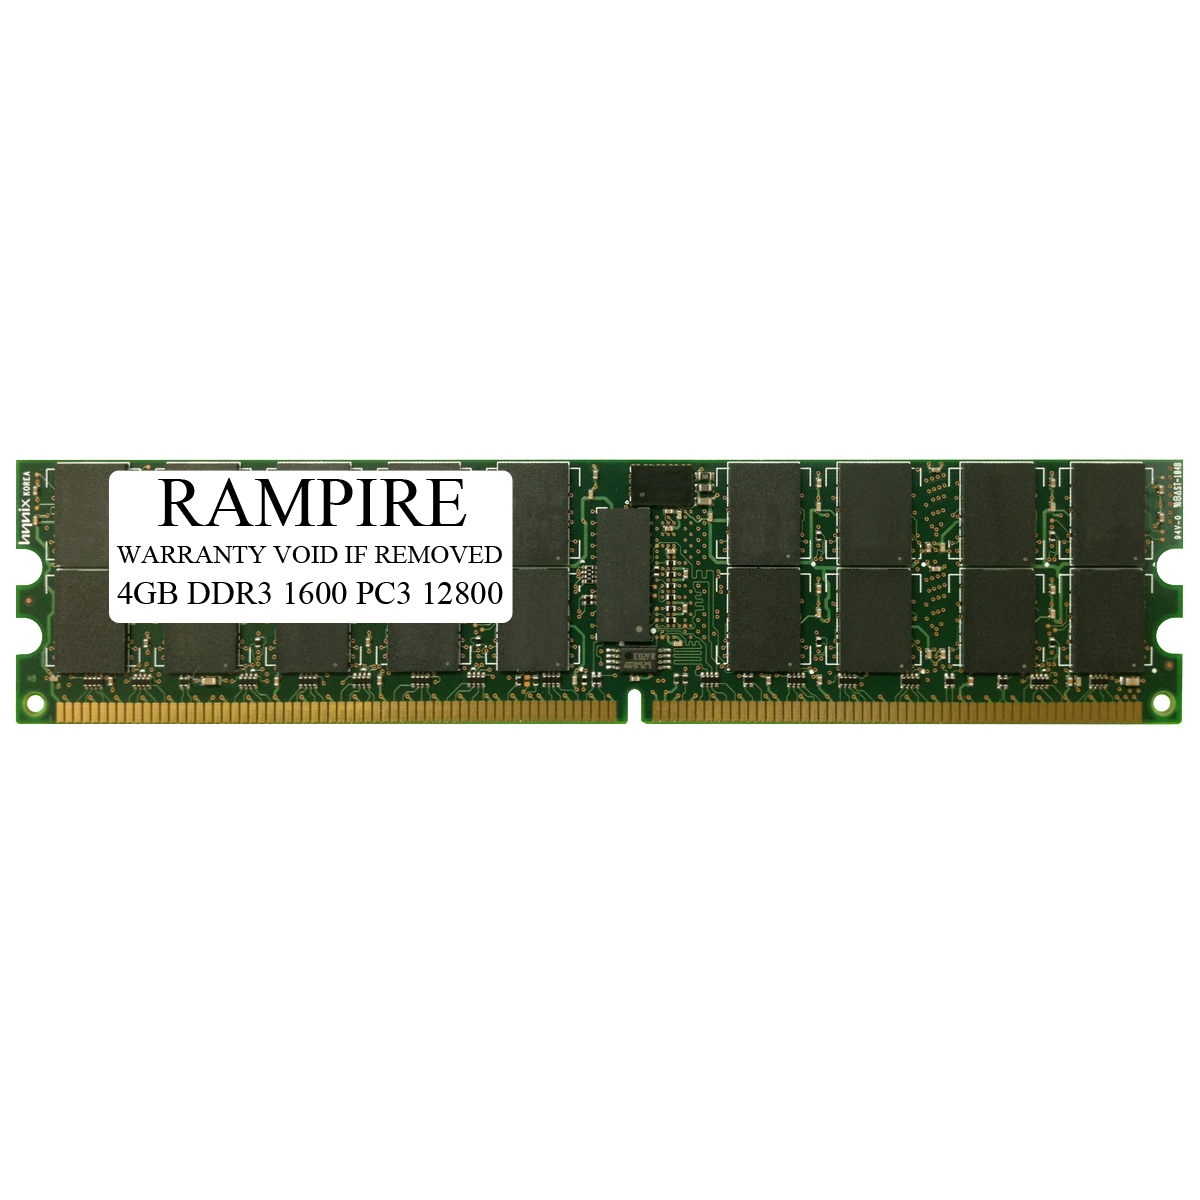 RAMPIRE 4GB DDR3 1600 (PC3 12800) 240-Pin SDRAM 1Rx4 Standard Profile 1.35V ECC Registered Server Memory